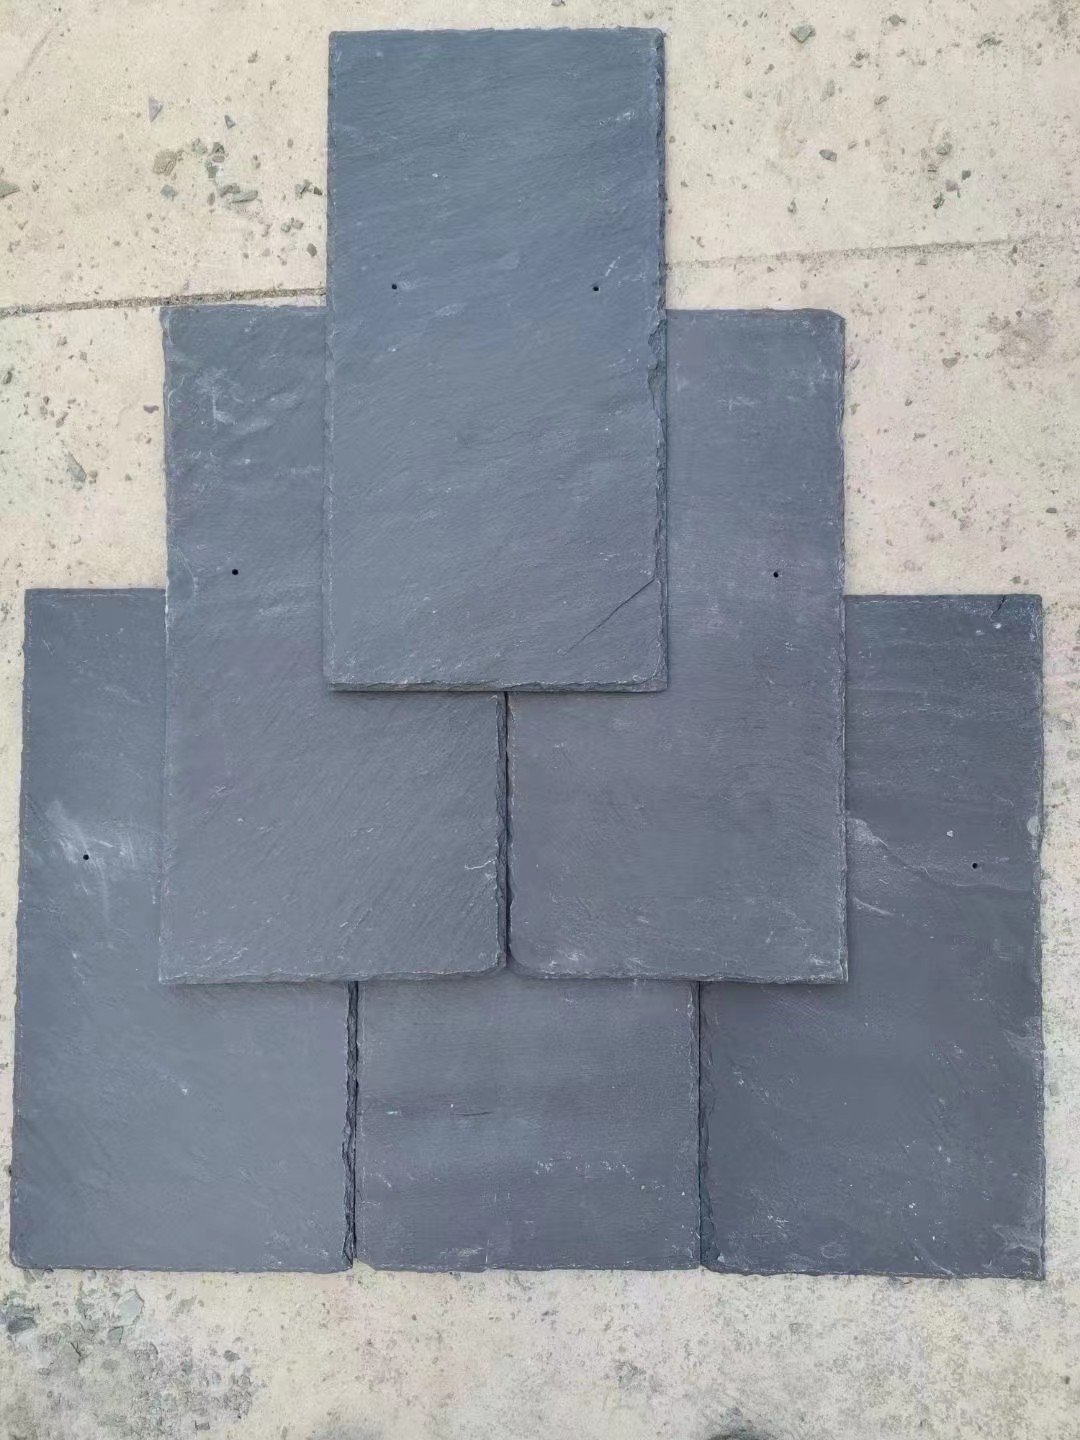 Black slate roof tile